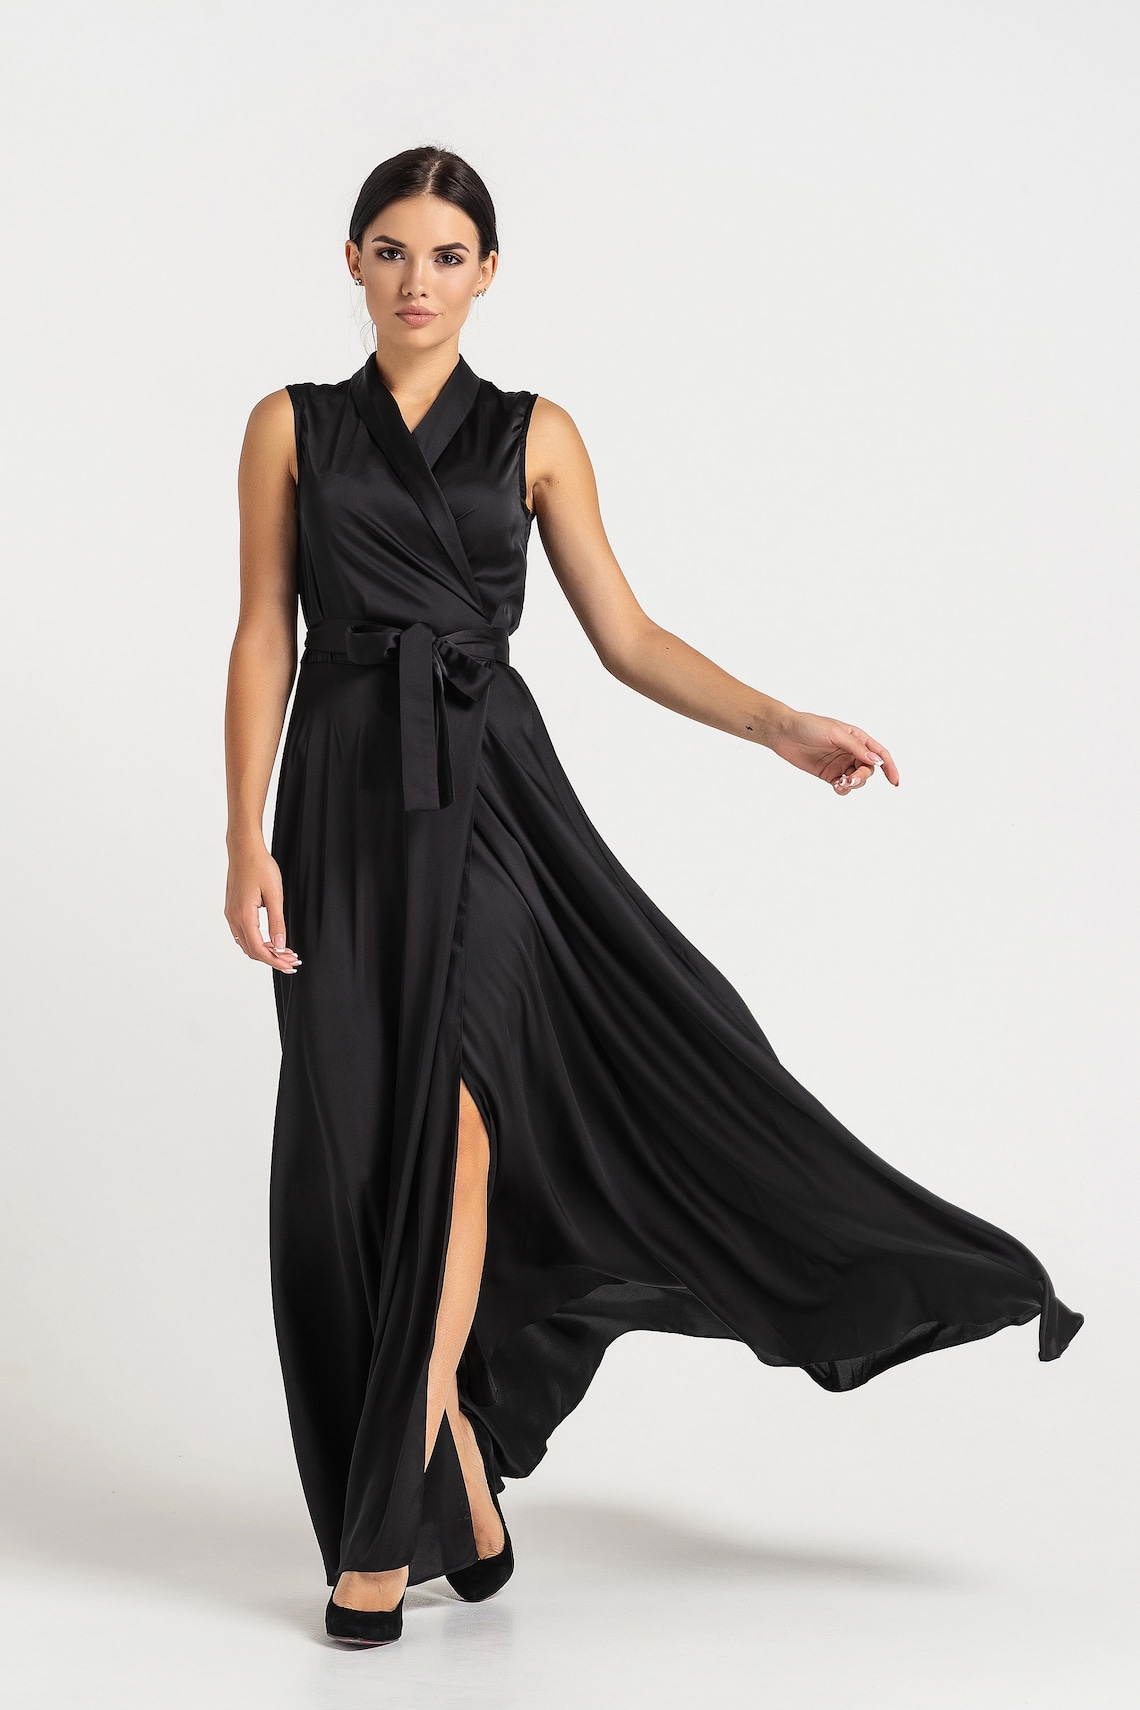 Sleeveless shawl collar wrap maxi dress Long summer black | Etsy